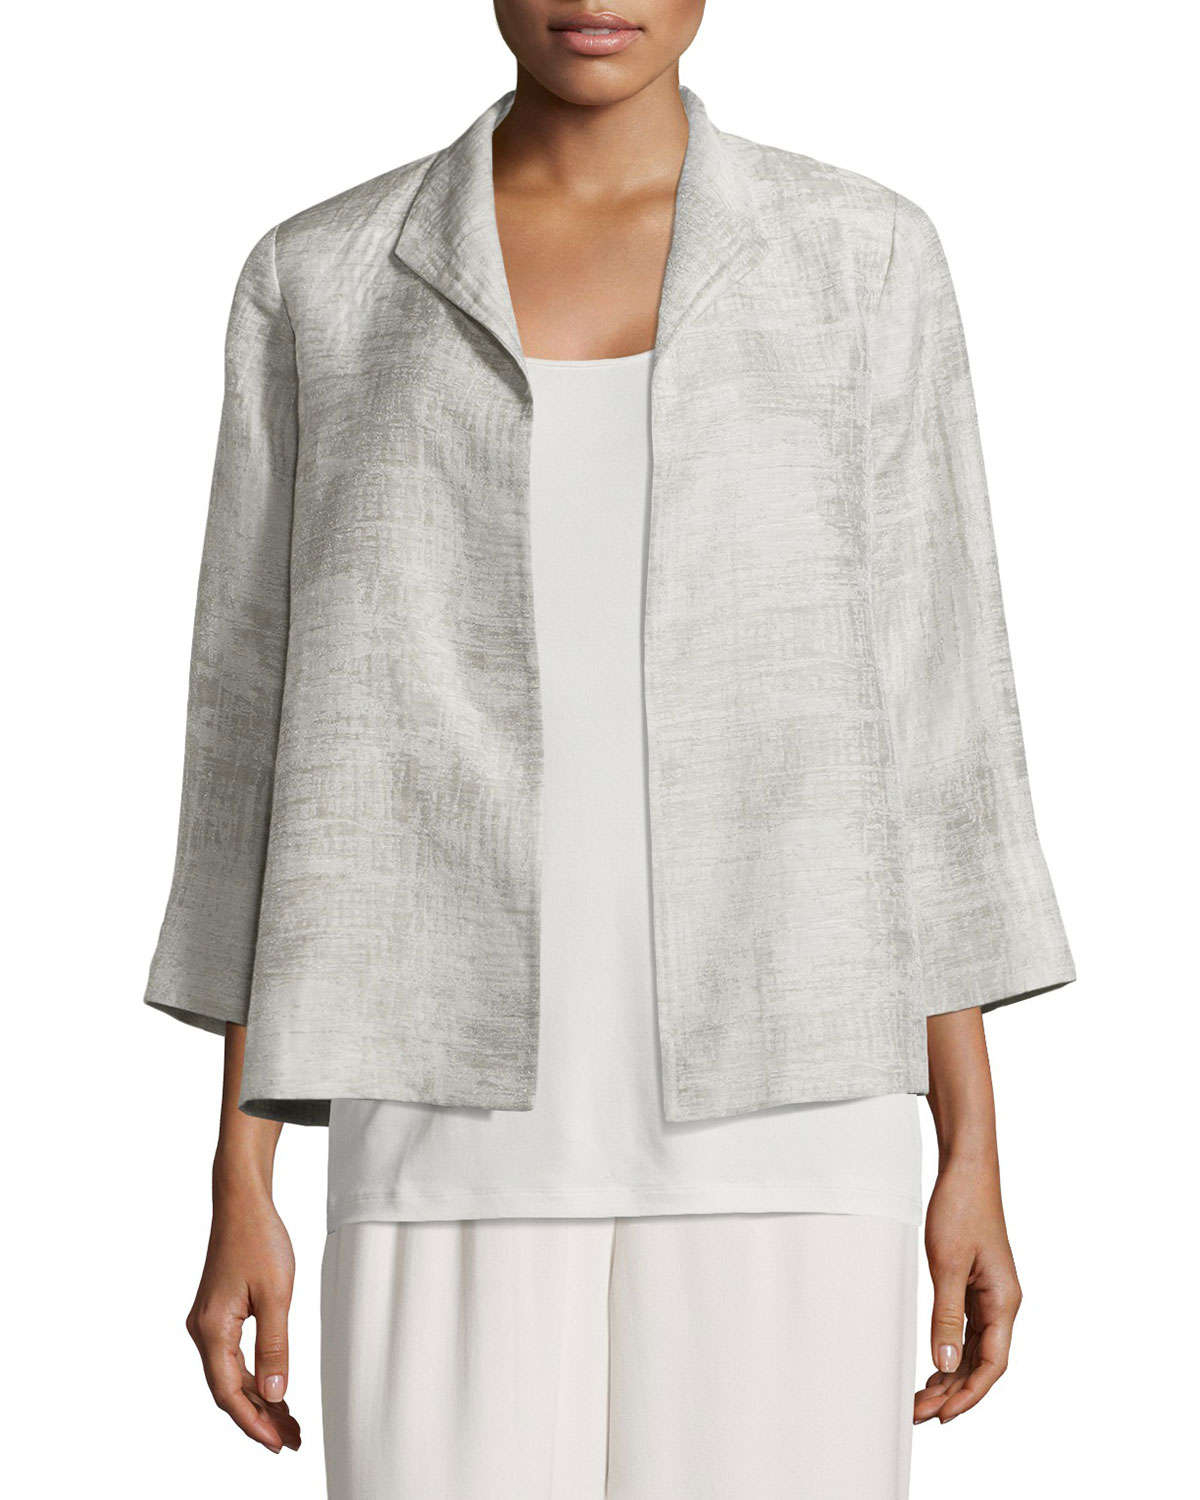 Lyst Eileen Fisher Linen CottonBlend Jacket in Gray